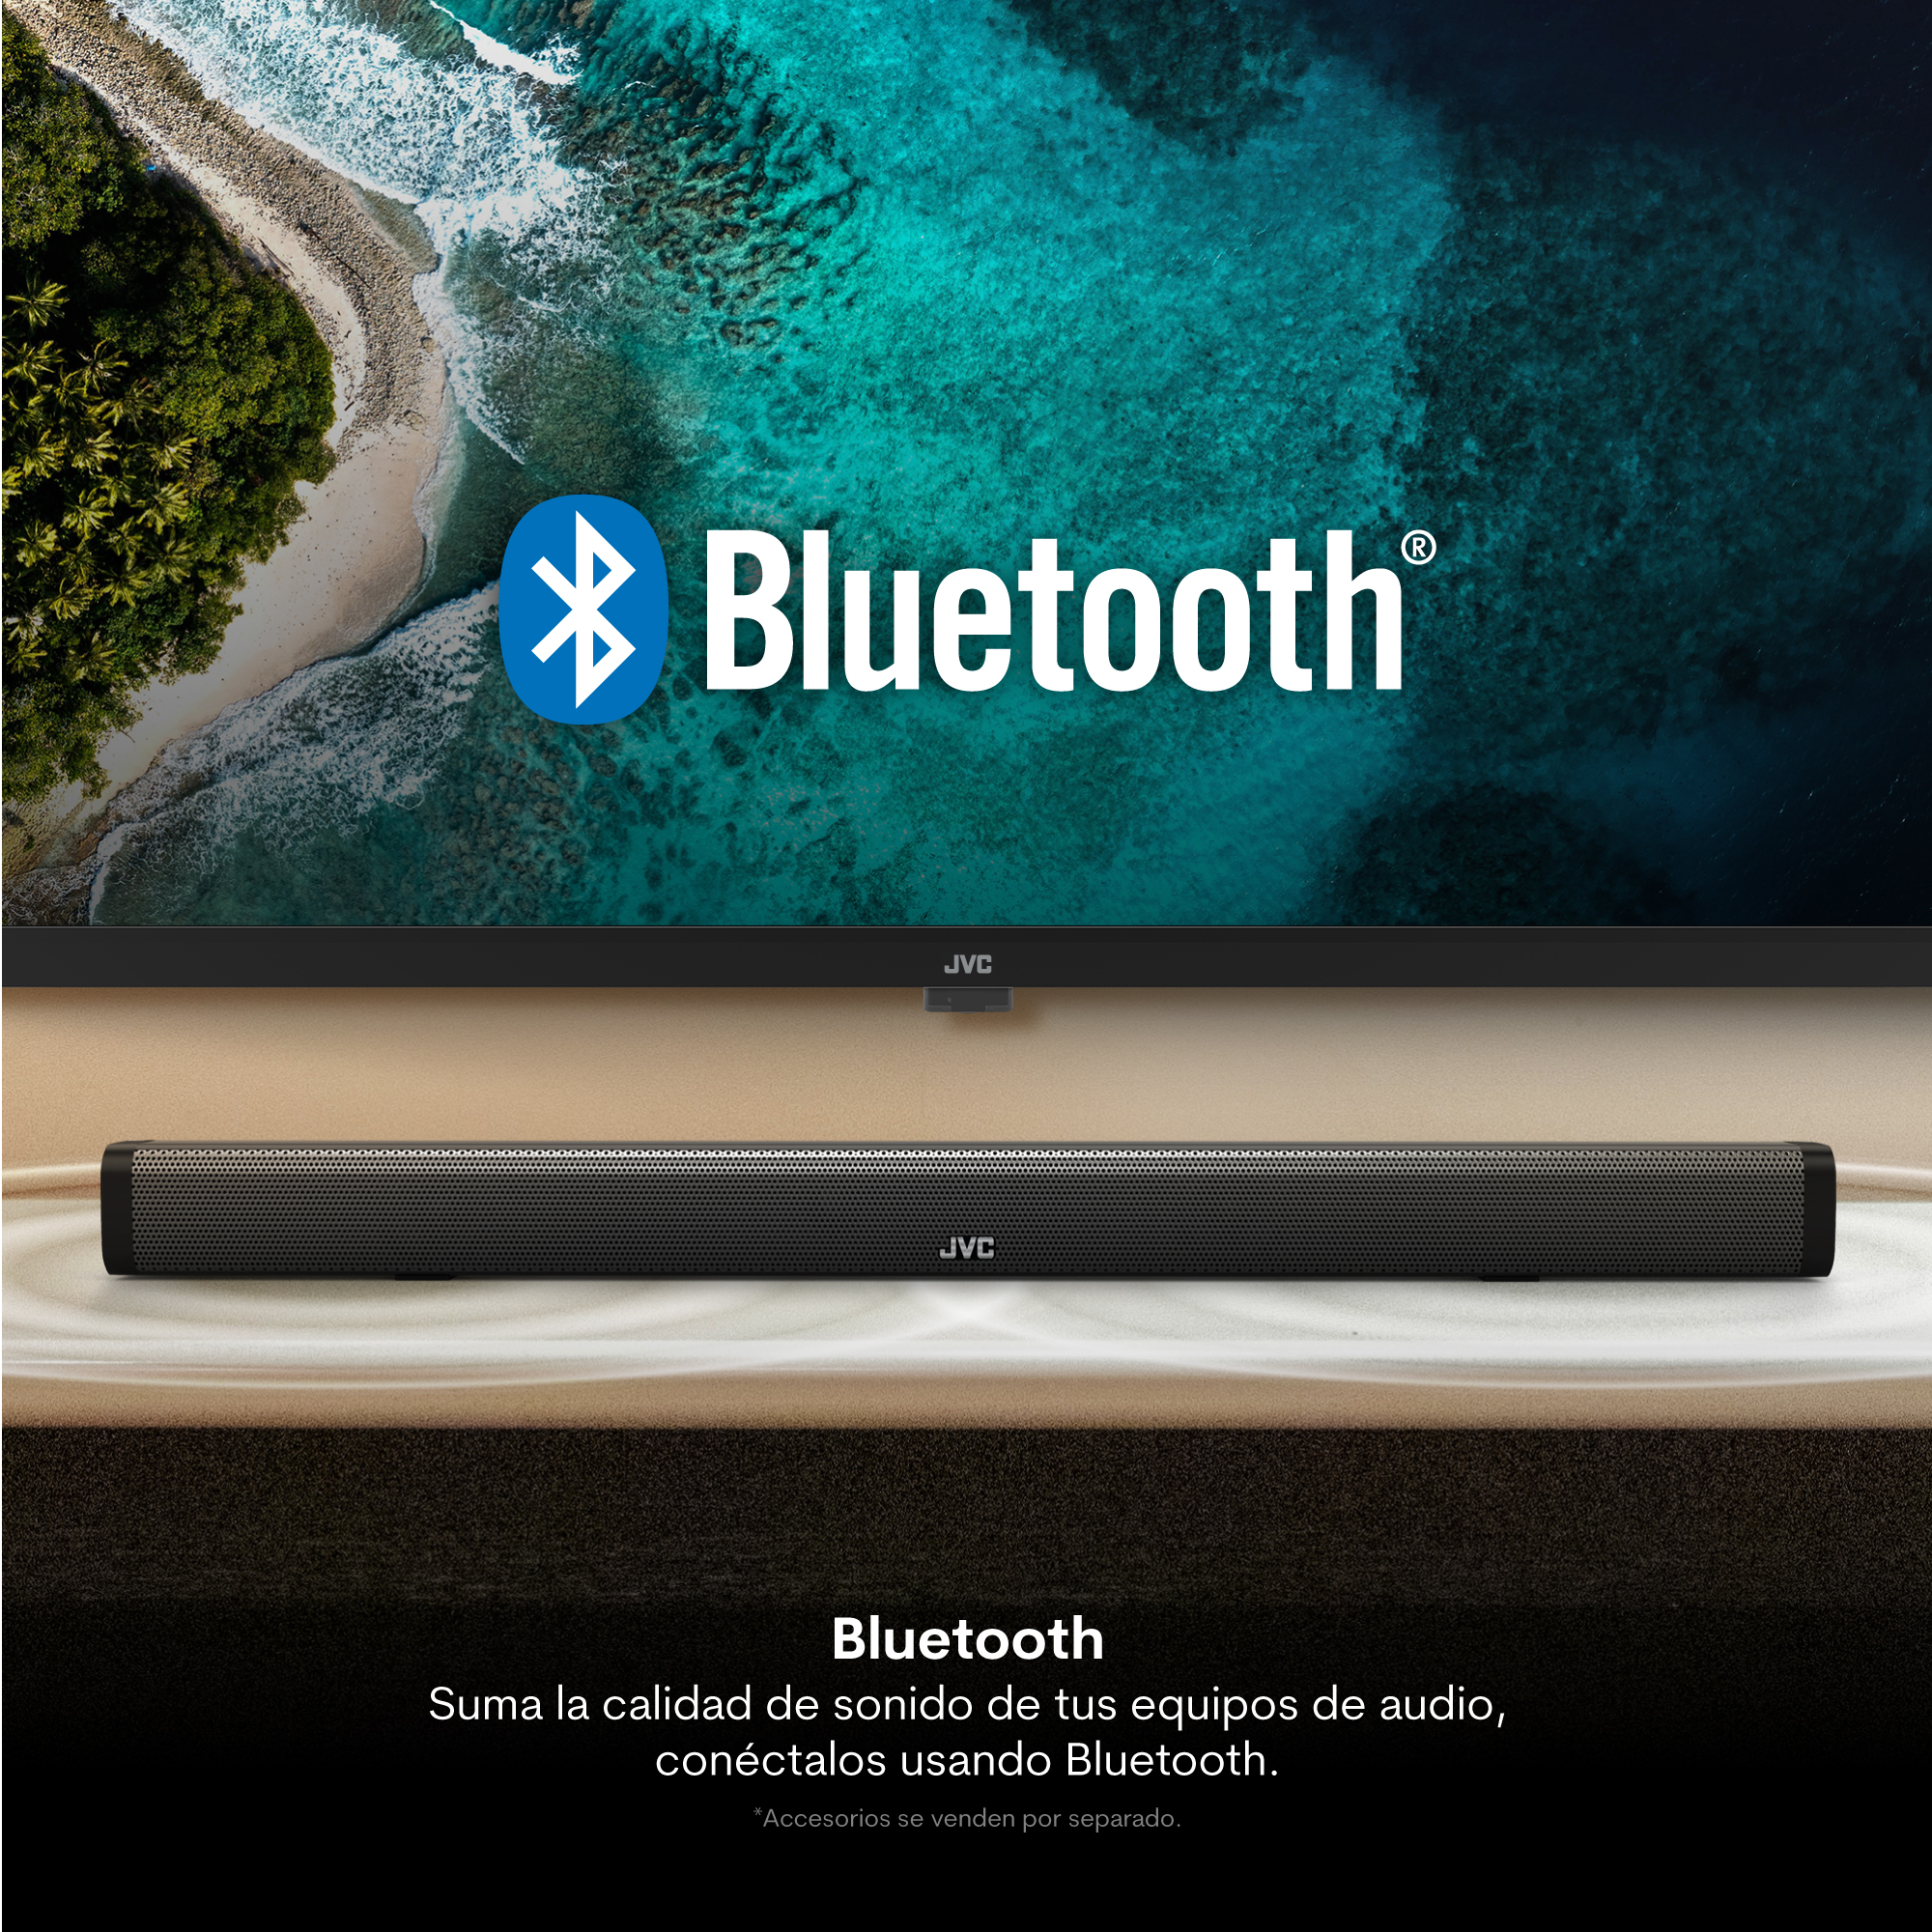 LG Smart TV 43 4K UHD en Barquisimeto